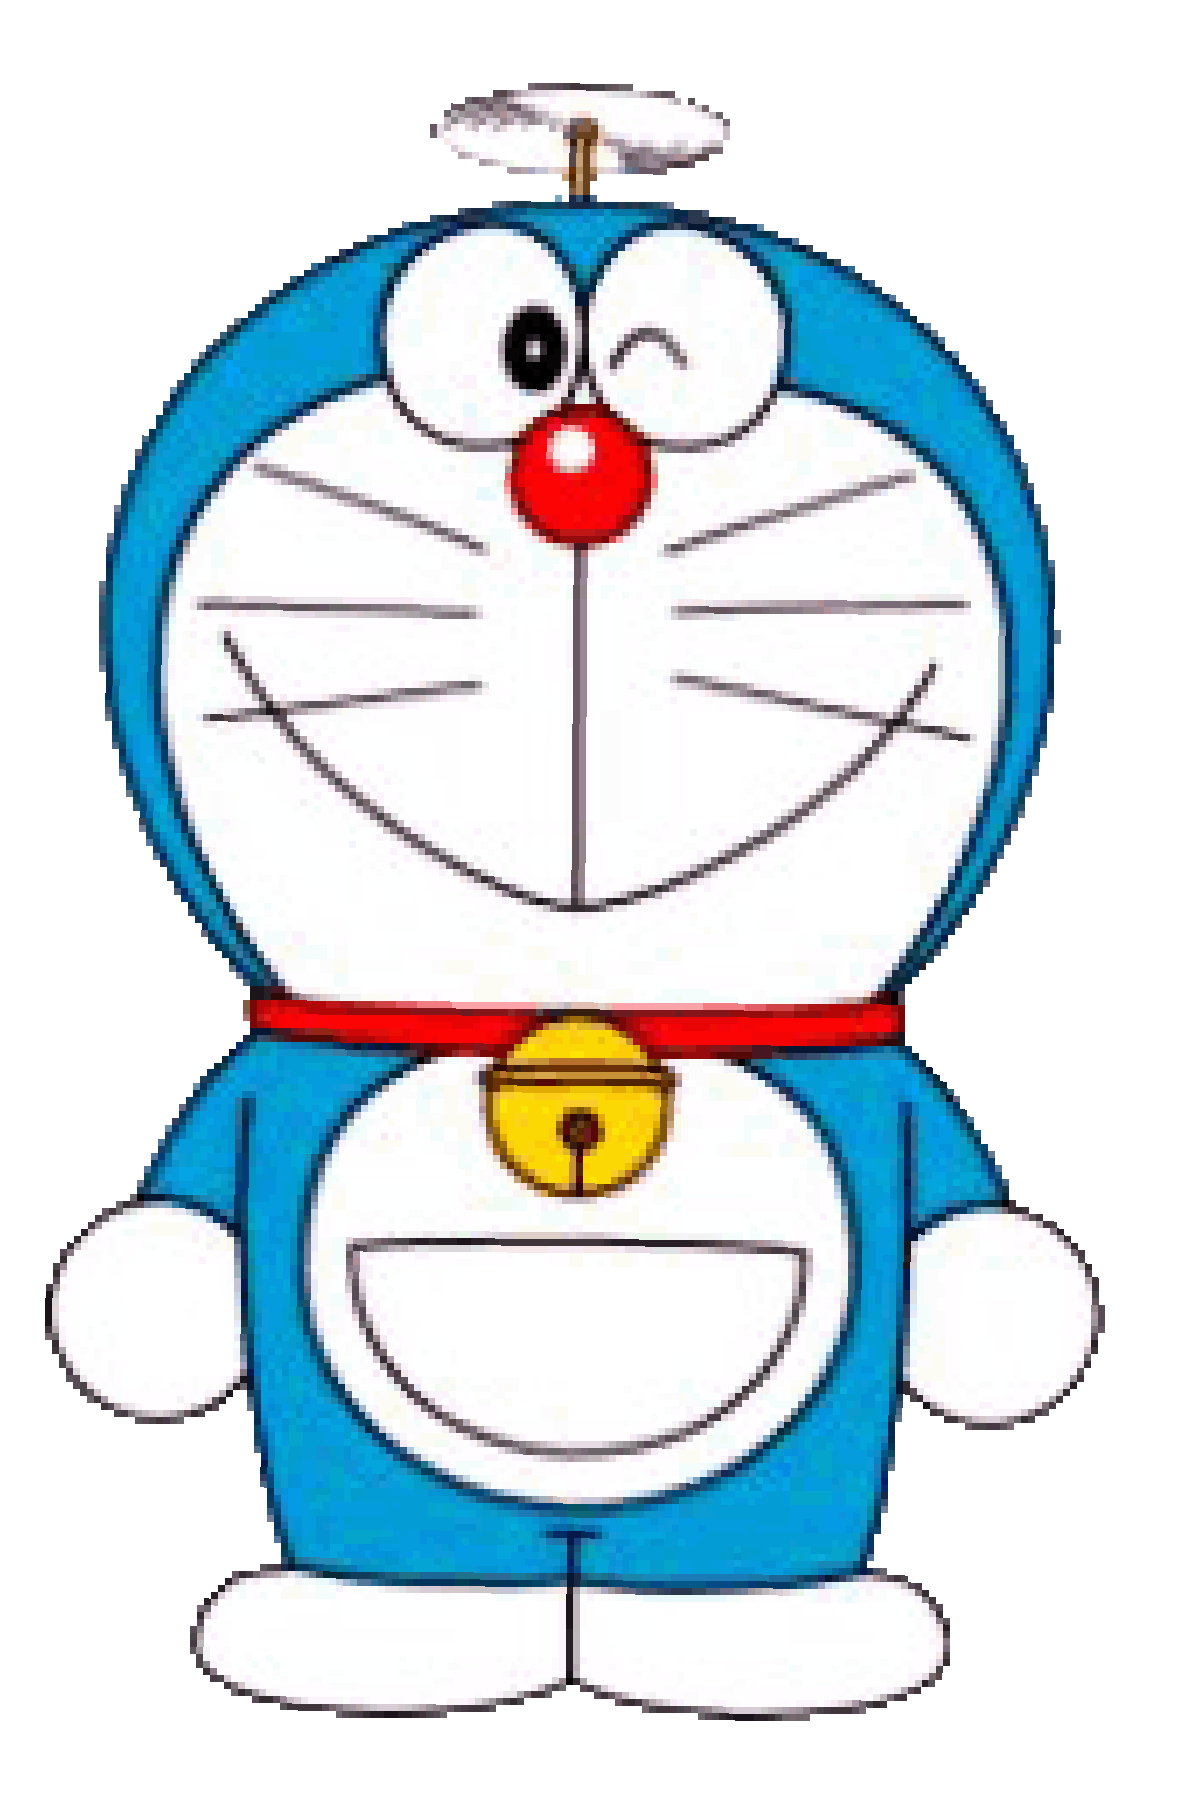 Doraemon Wallpaper HD iPhone Android Linux Mac Windows Wallpaperbook